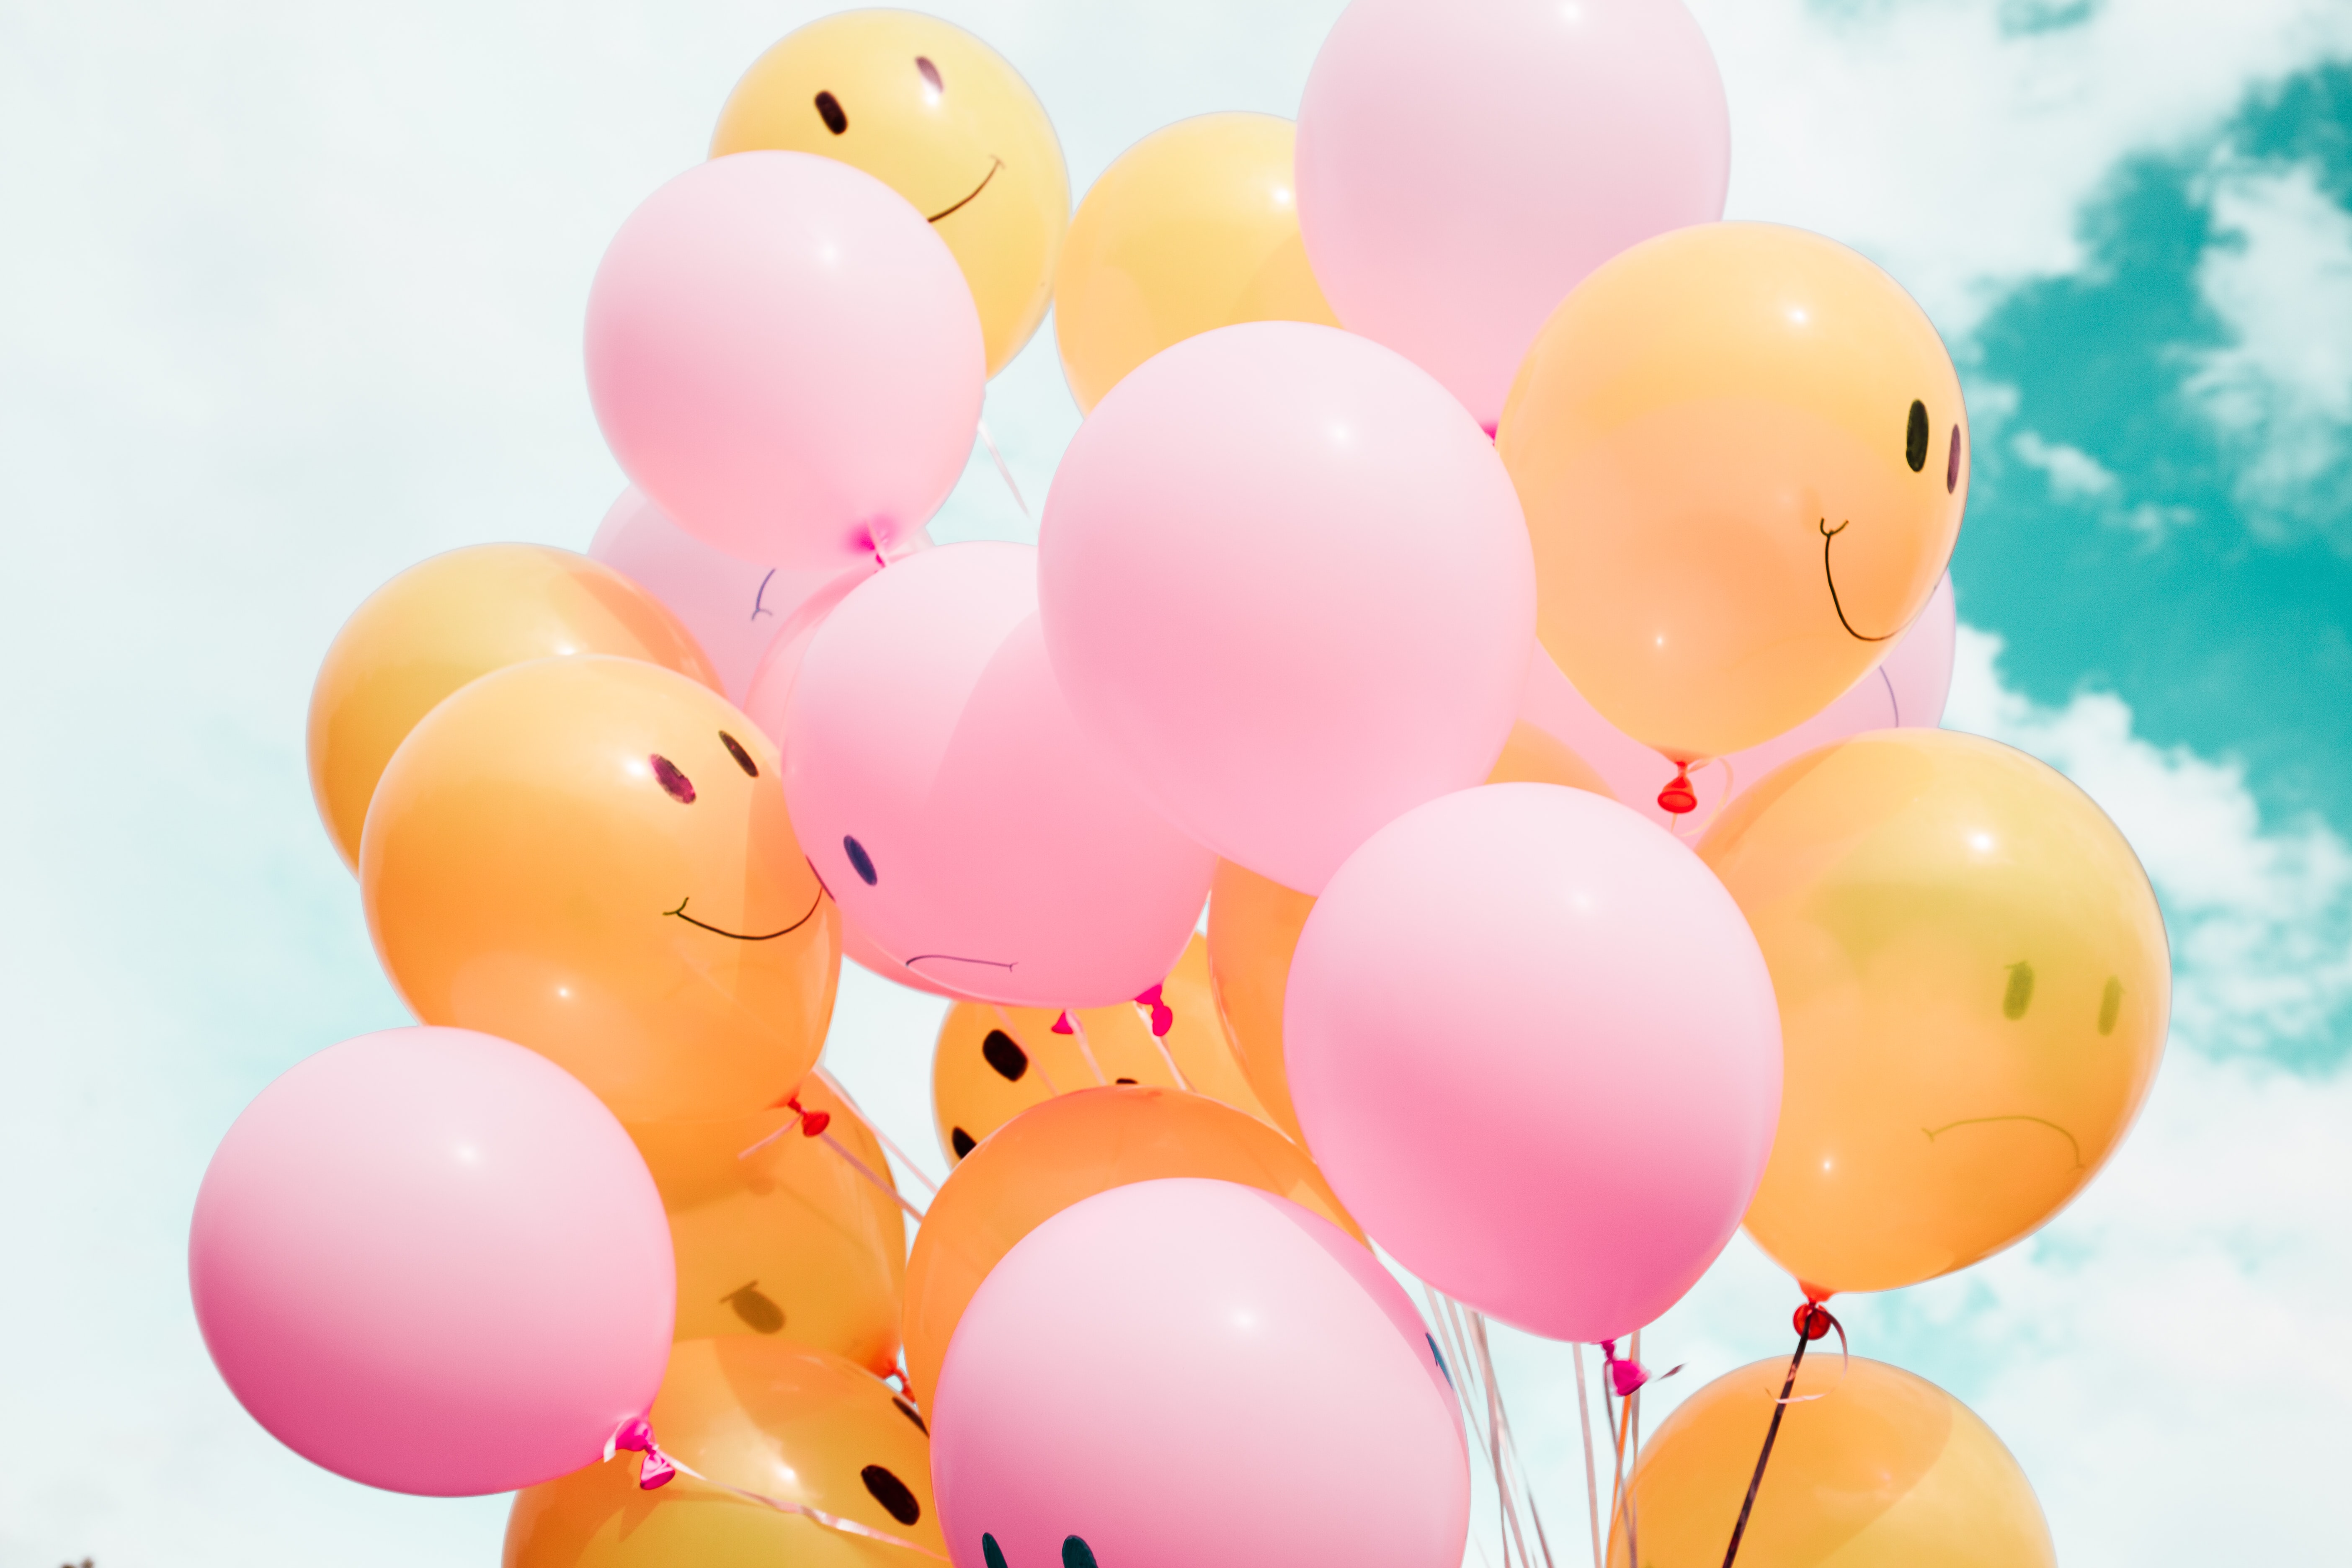 happy face balloons